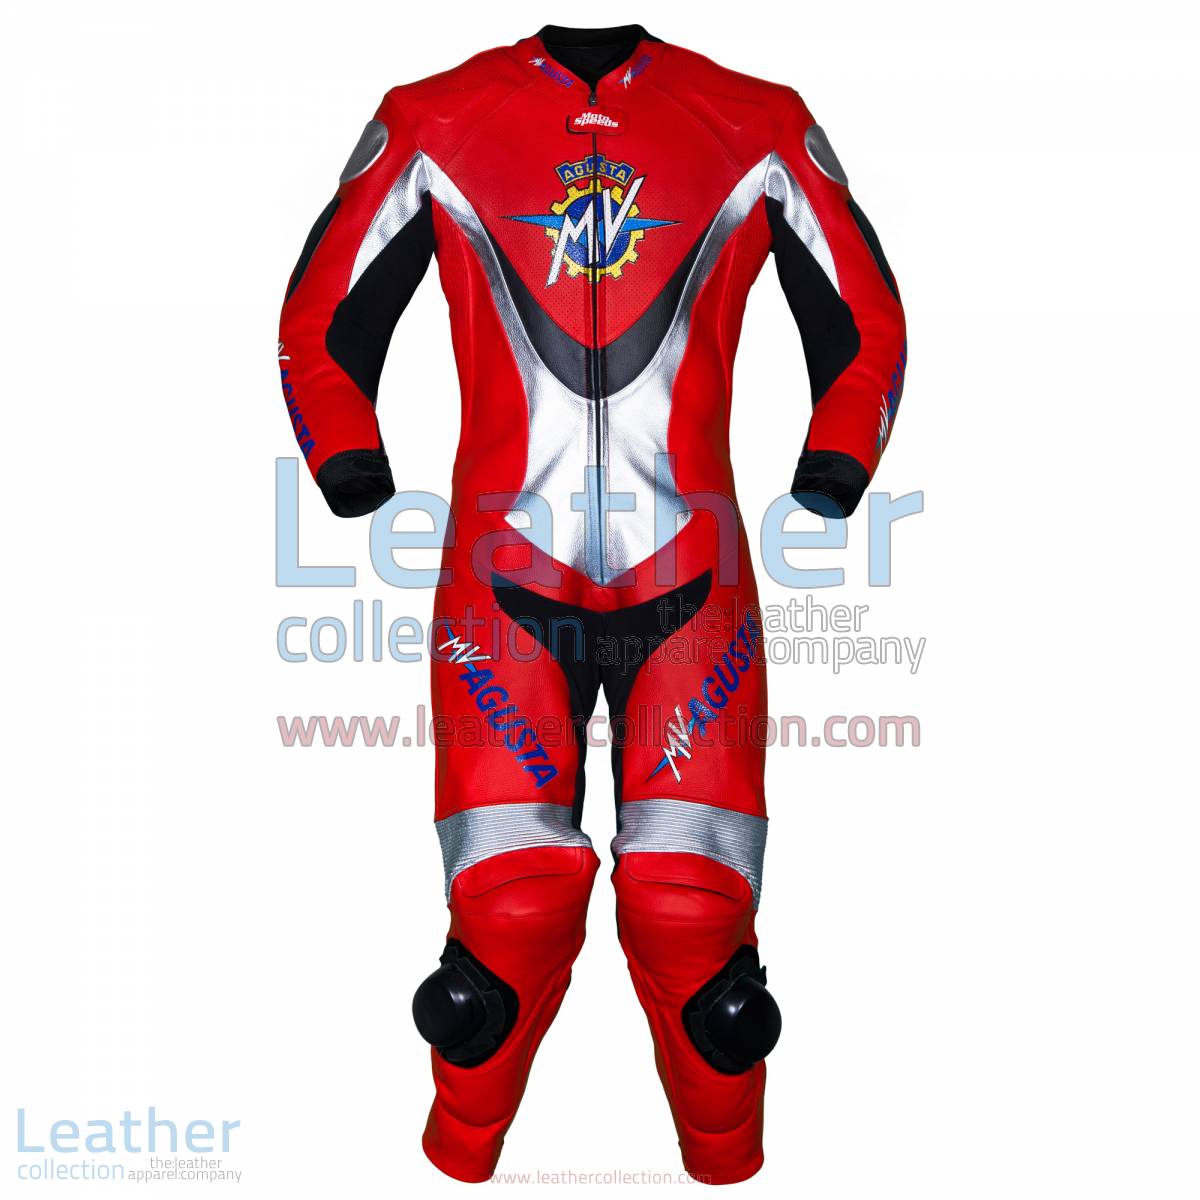 MV Agusta Racing Leather Suit | mv agusta racing